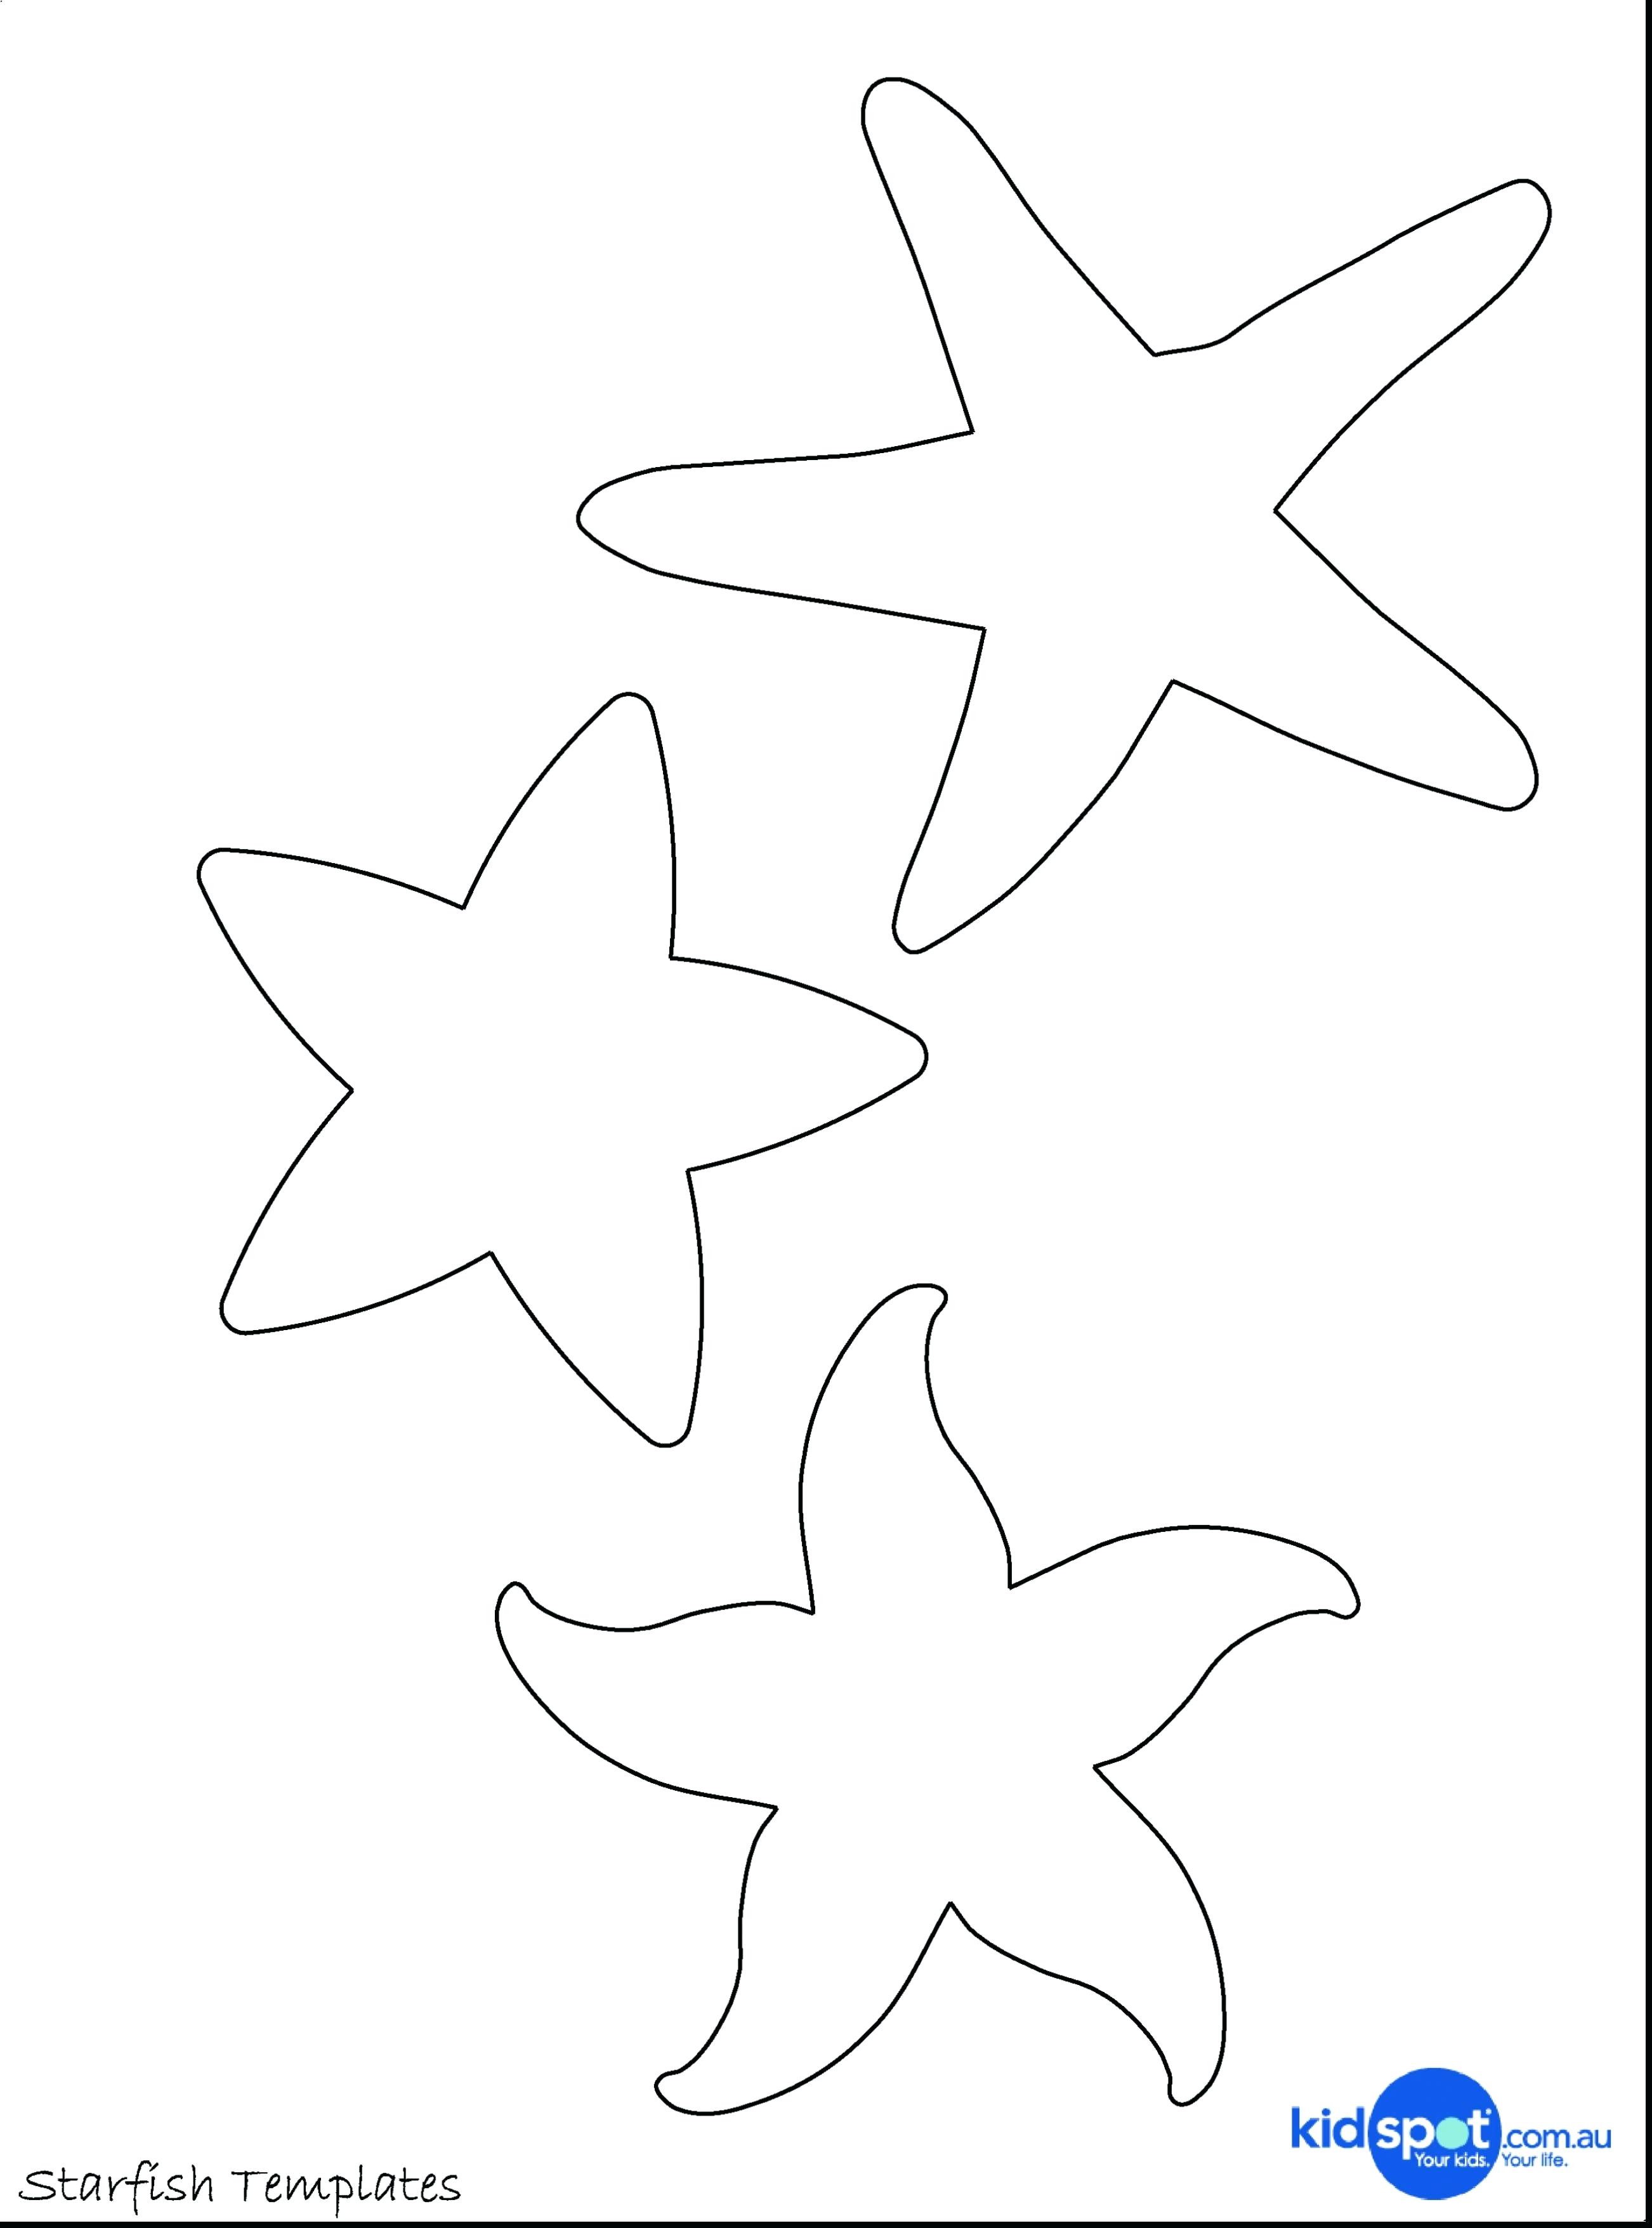 starfish-drawing-template-at-getdrawings-free-download